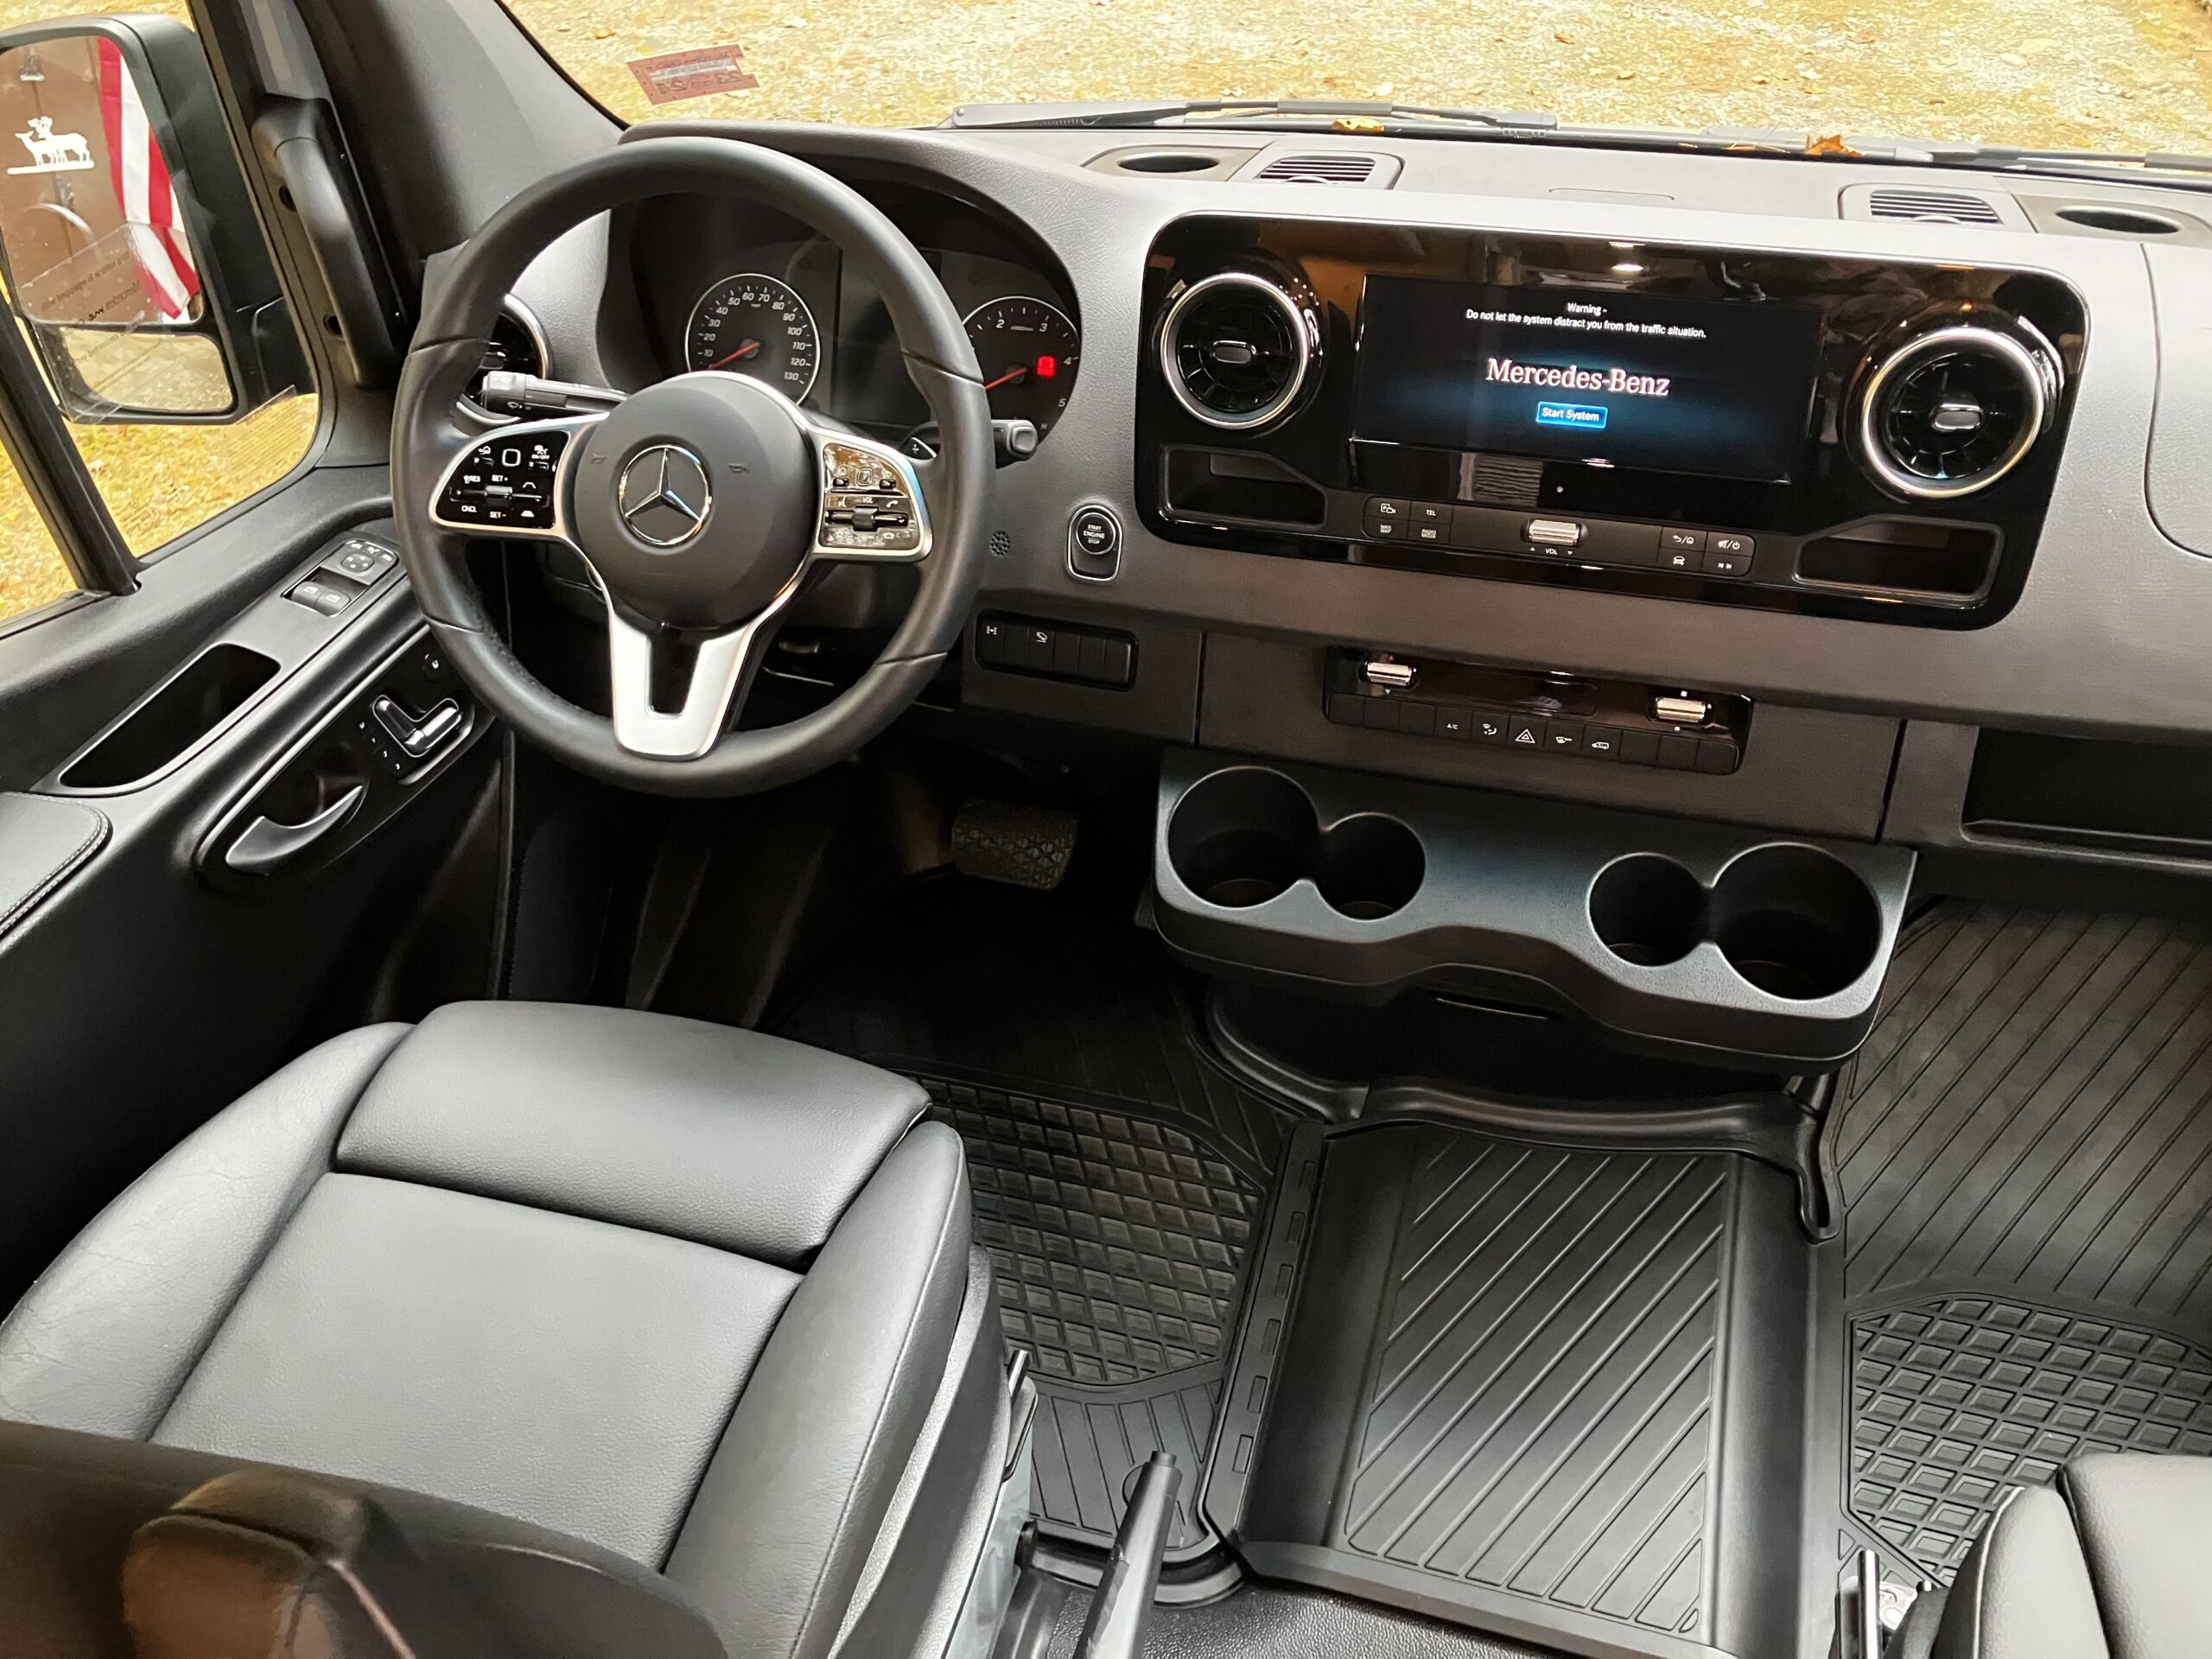 Mercedes-Benz Sprinter Interior